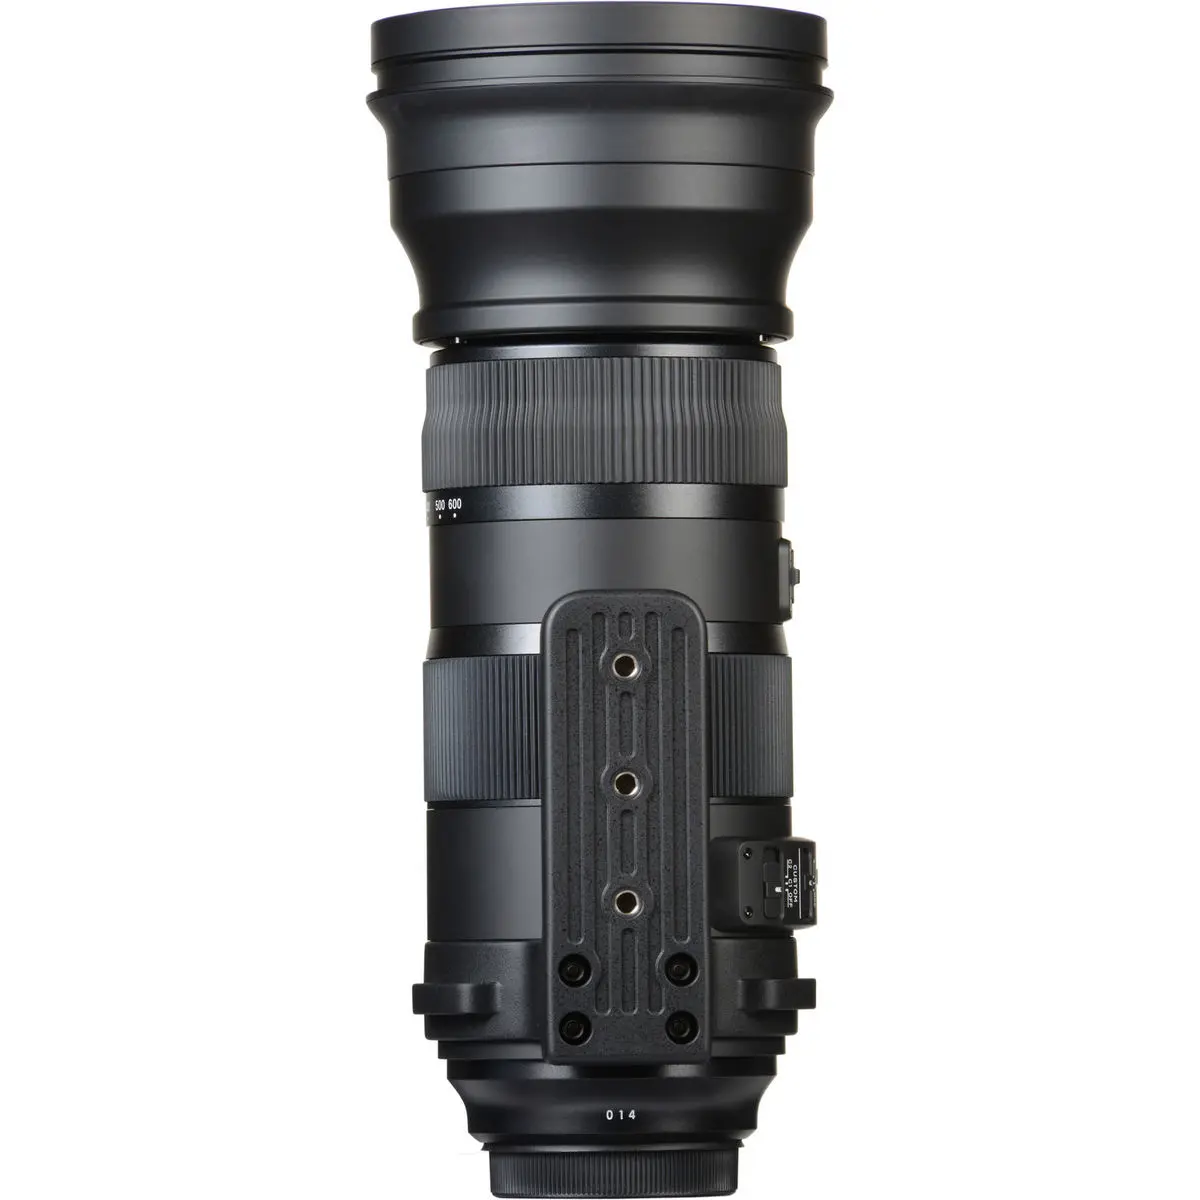 2. Sigma 150-600mm f/5-6.3 DG OS HSM | Sport (Nikon) Lens